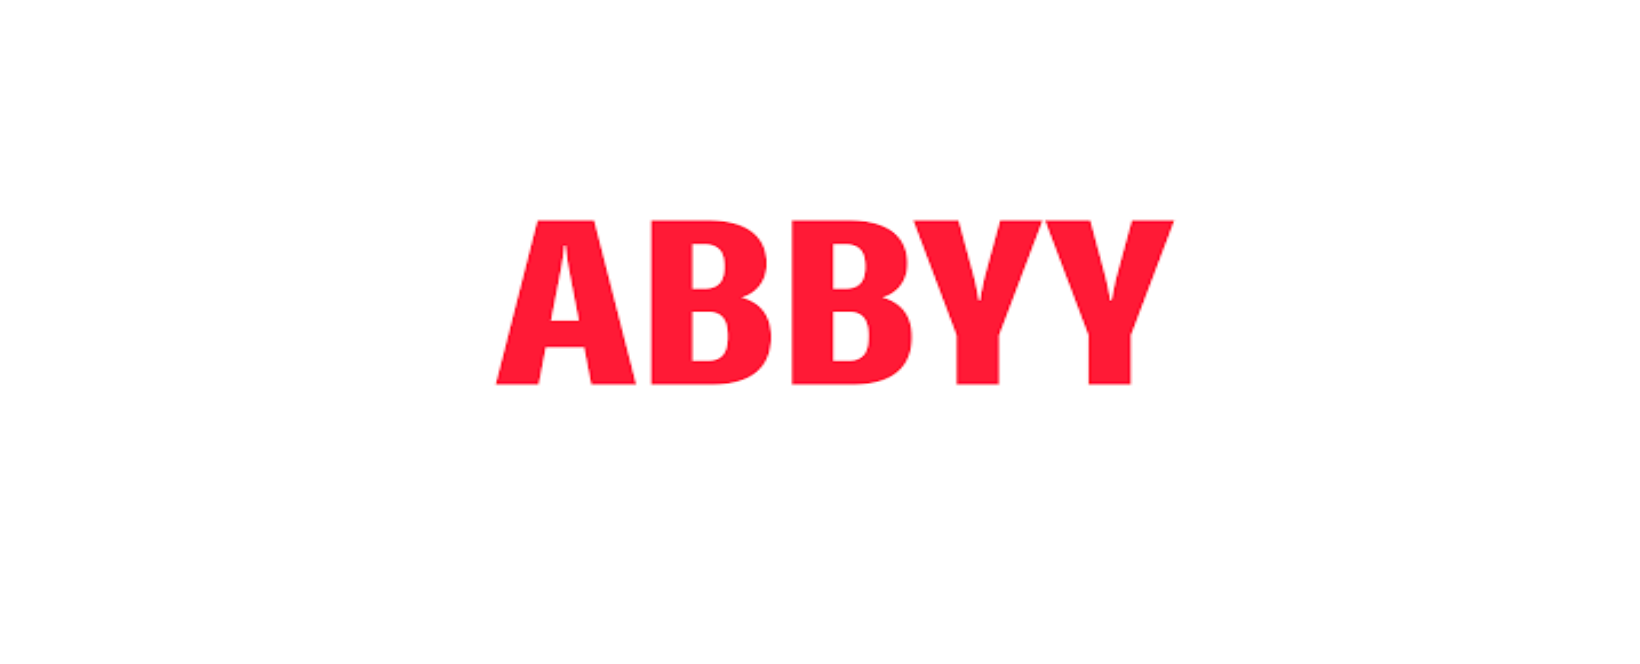 ABBYY Discount Code 2022